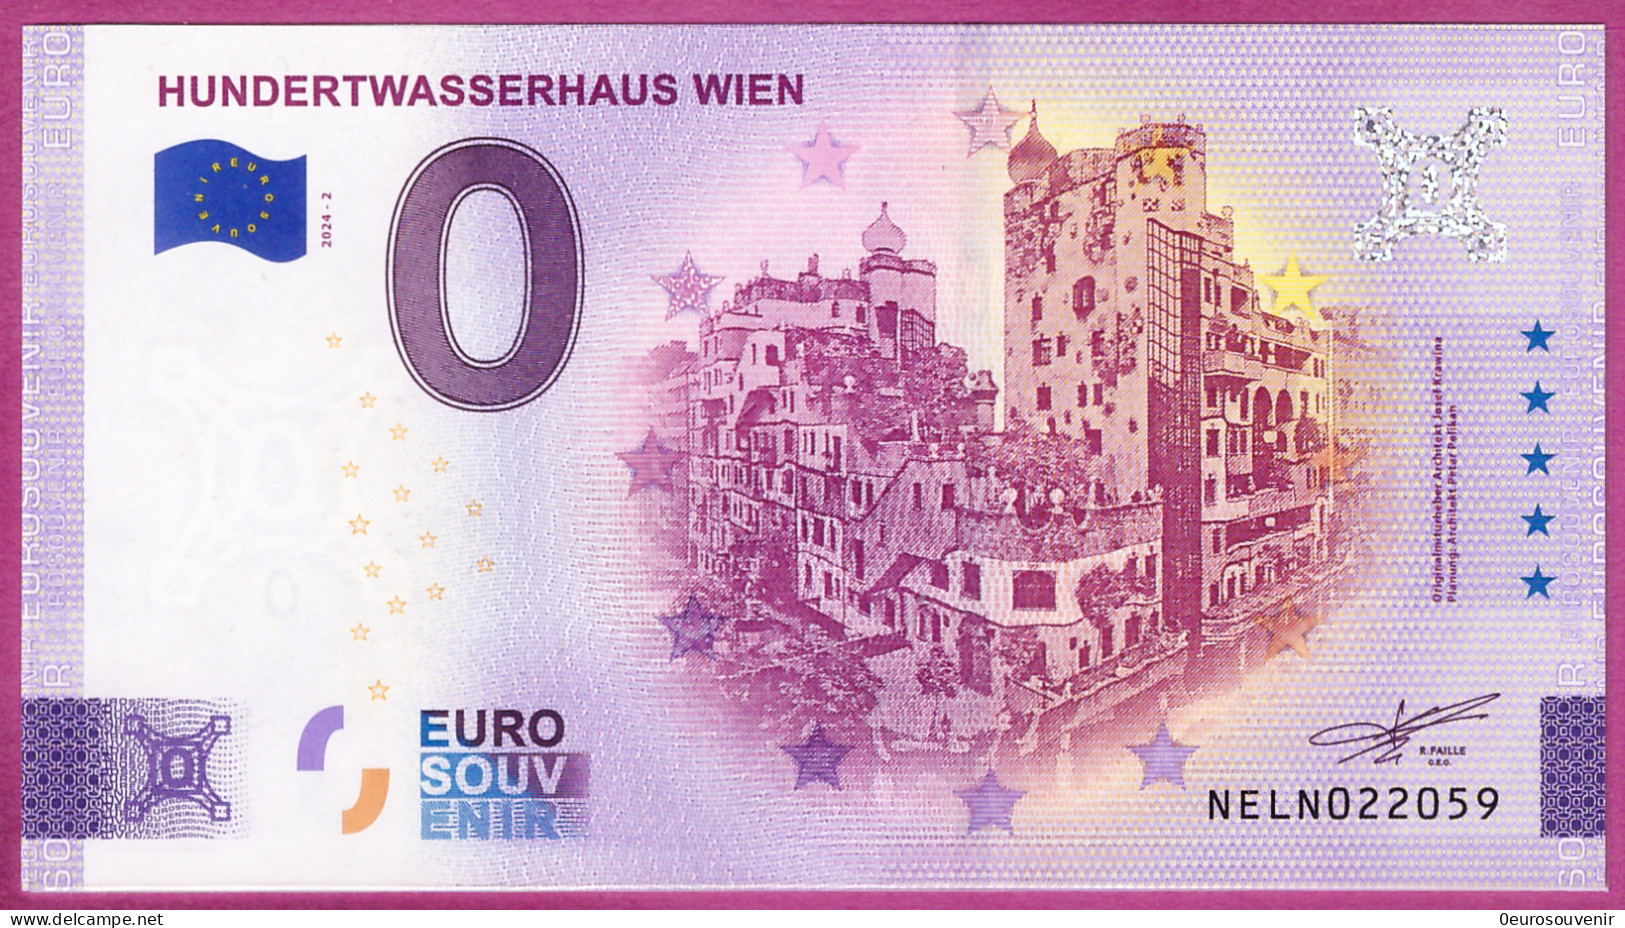 0-Euro NELN 2024-2 HUNDERTWASSERHAUS WIEN - Private Proofs / Unofficial